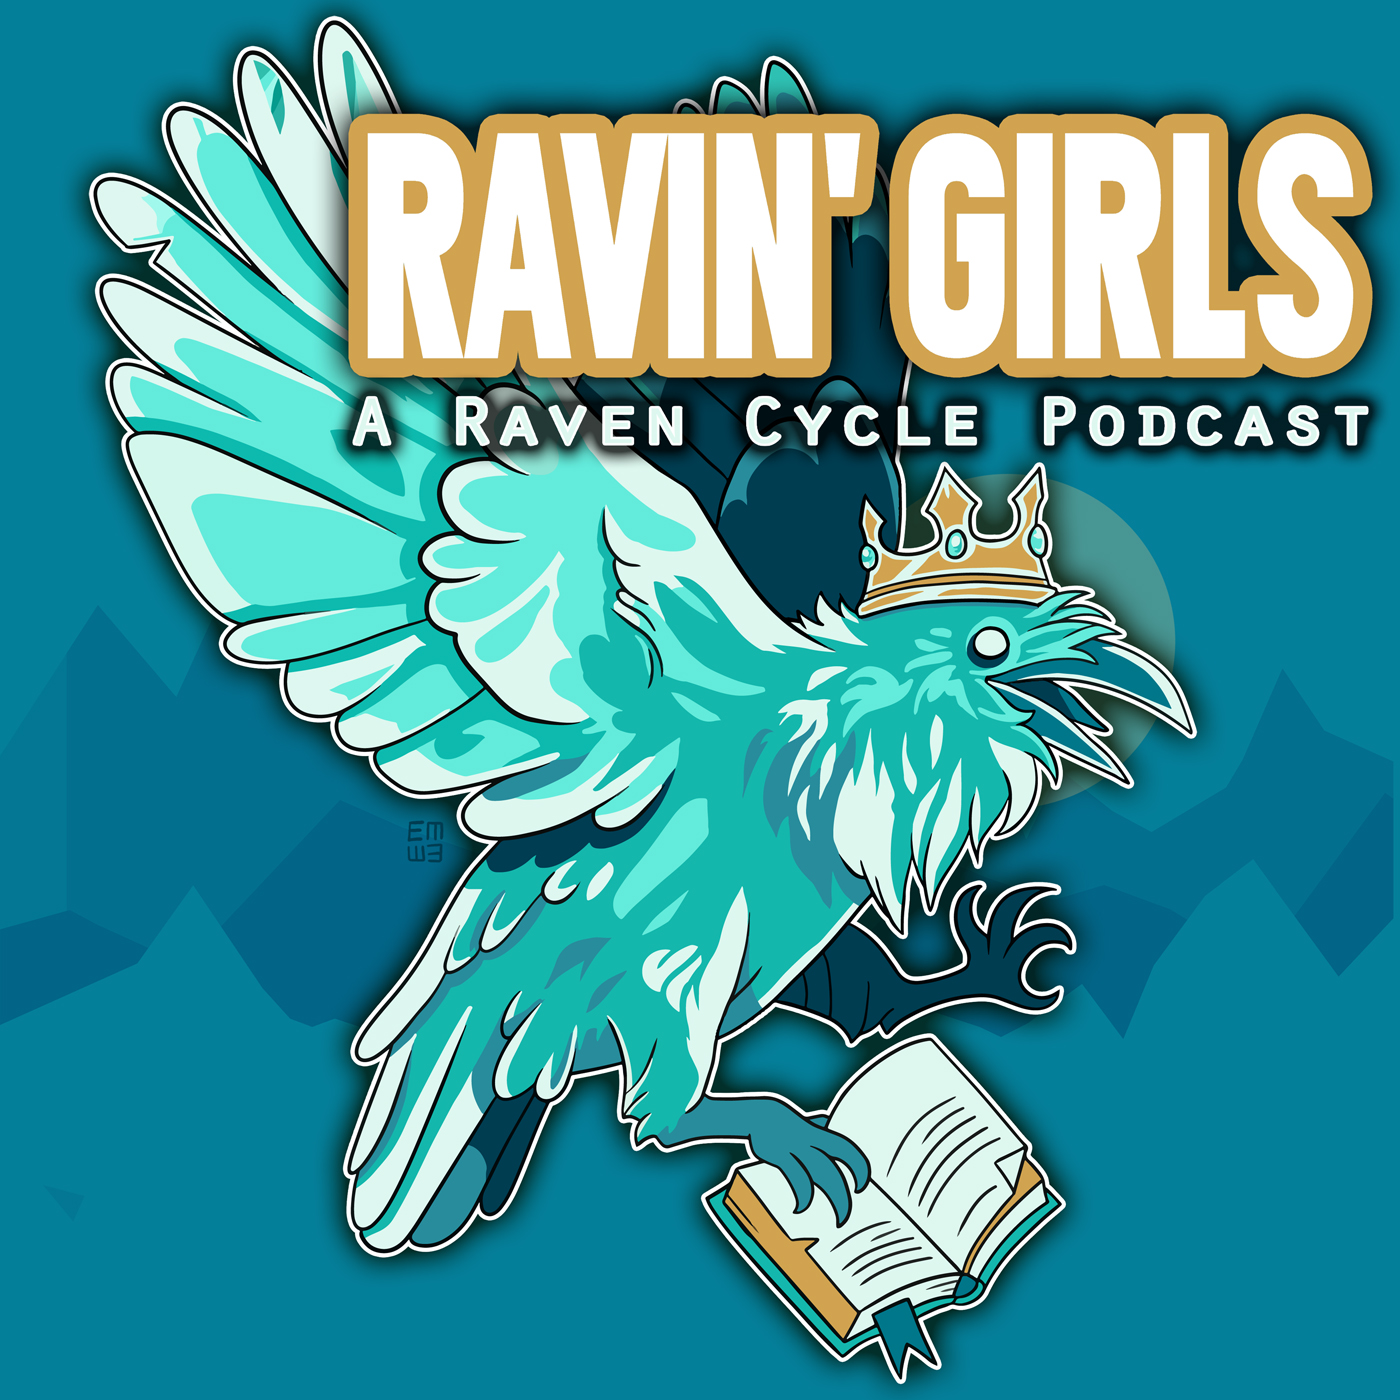 Ravin' Girls Episode 21: The Devil's Junk